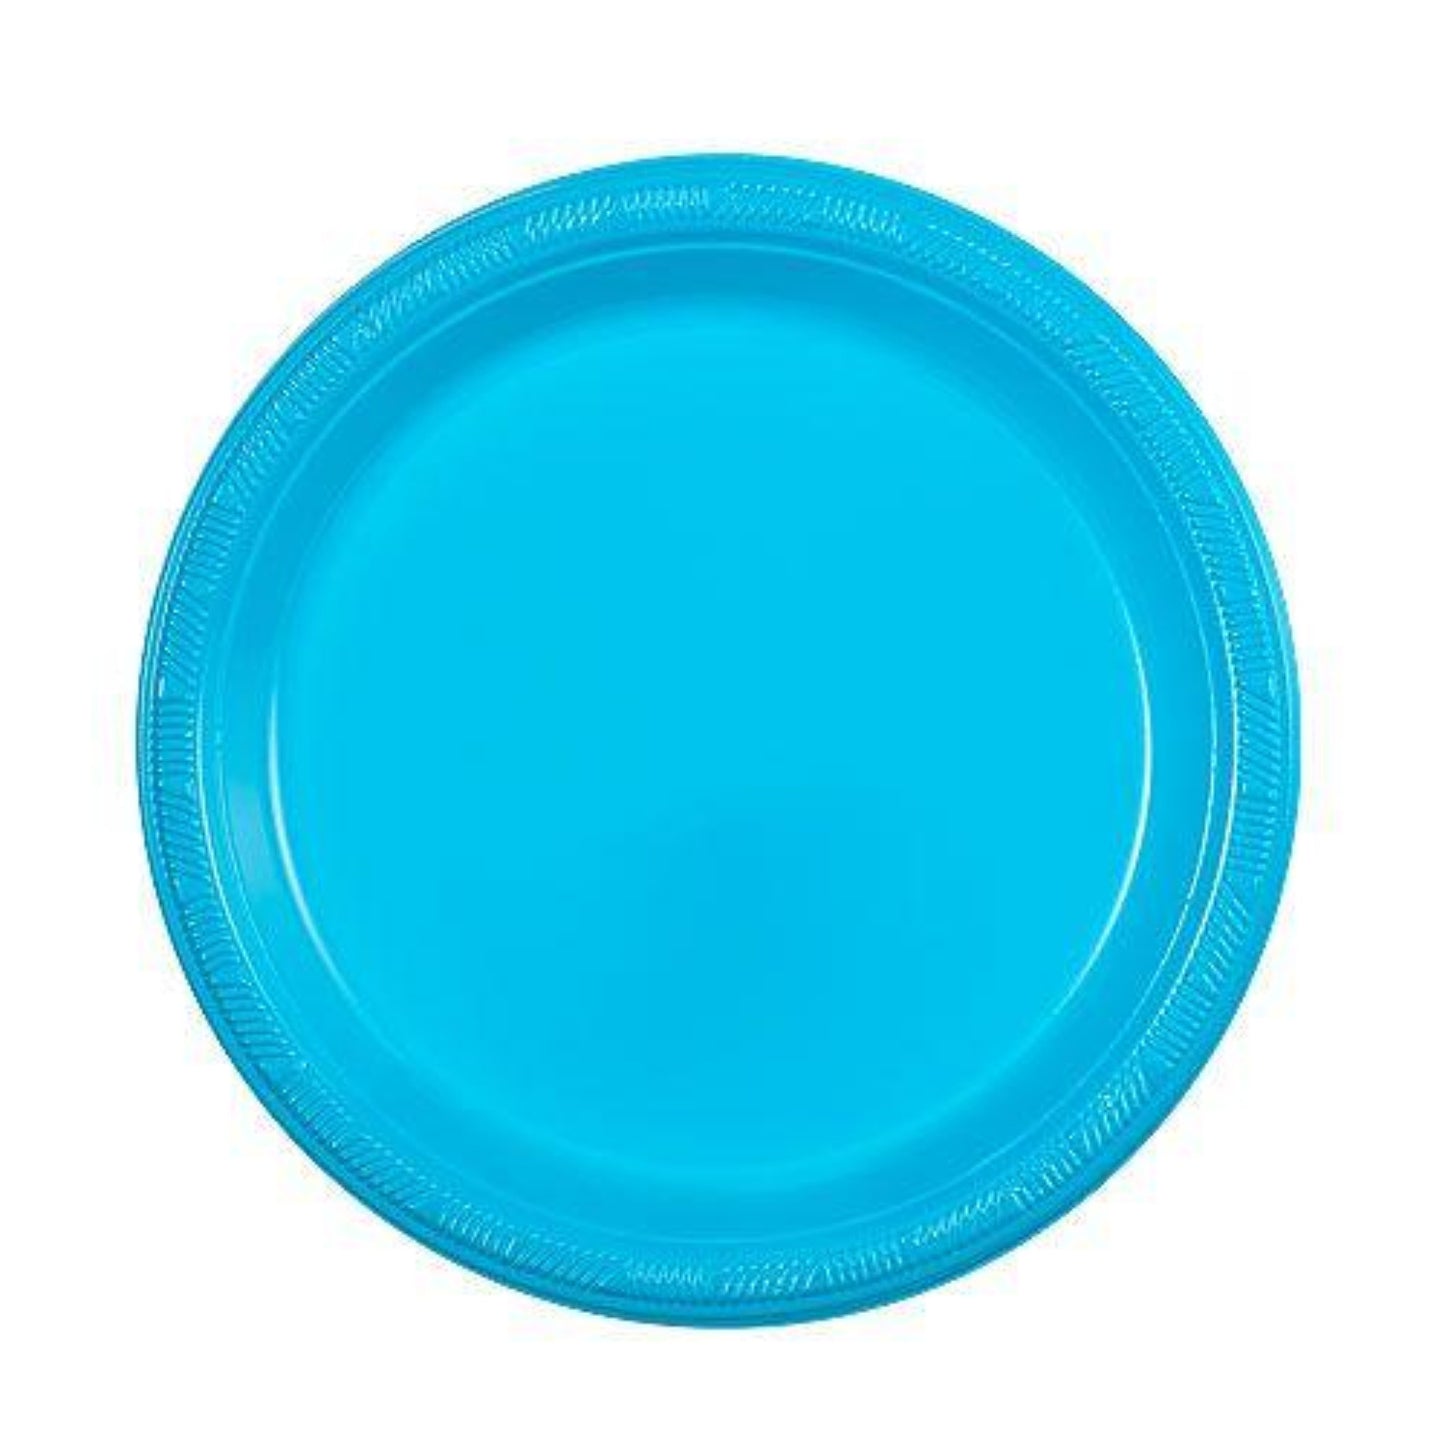 SALE Hanna K. Signature Plastic Plates Island Blue 7" 50 count  Hanna K Signature   